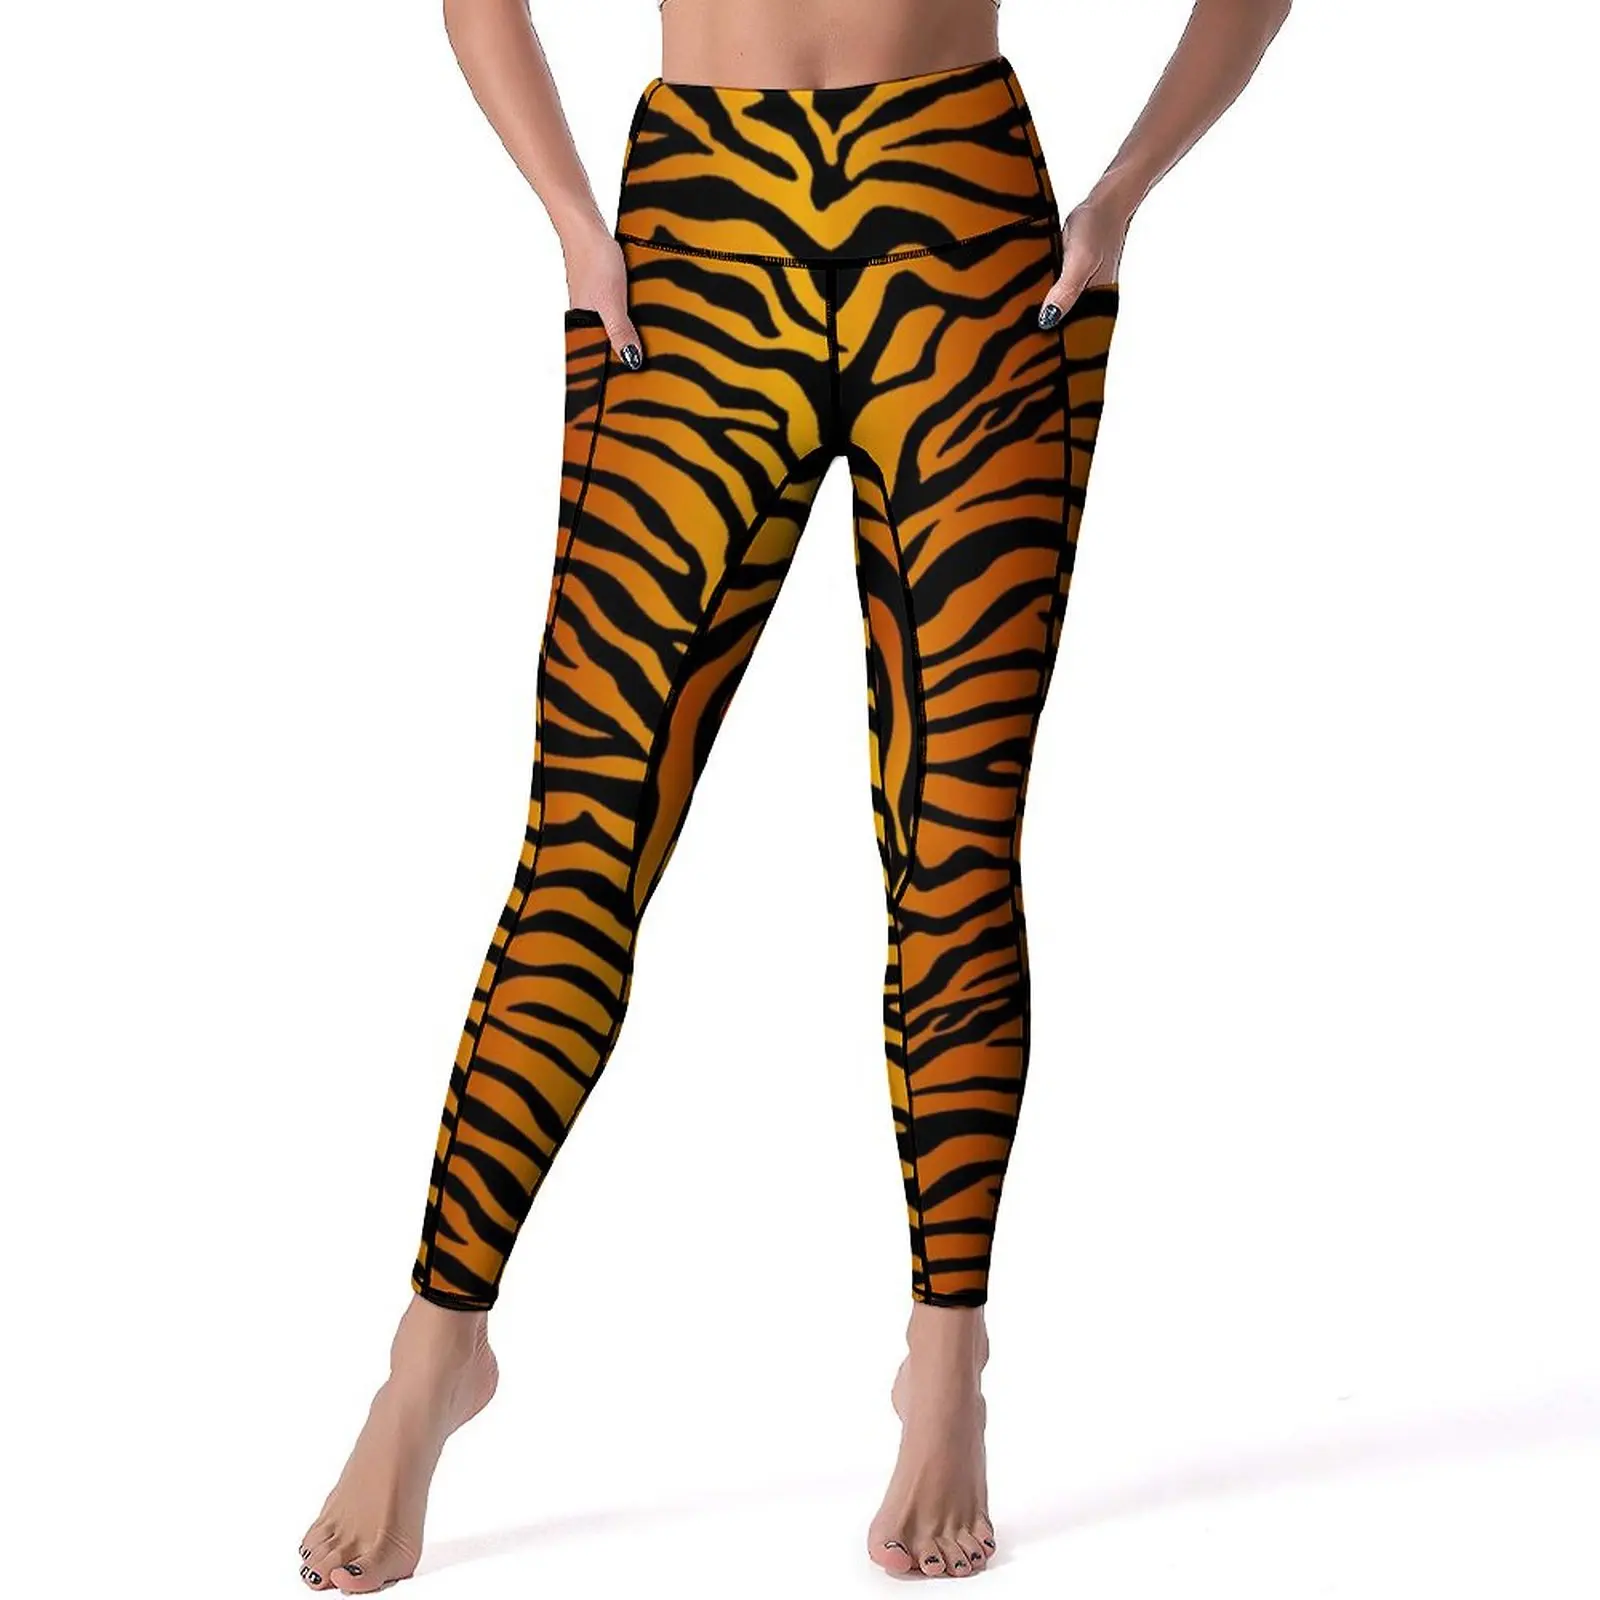 

Tiger Stripes Yellow Leggings Animal Print Workout Yoga Pants Women High Waist Sweet Leggins Sexy Stretchy Design Sports Tights